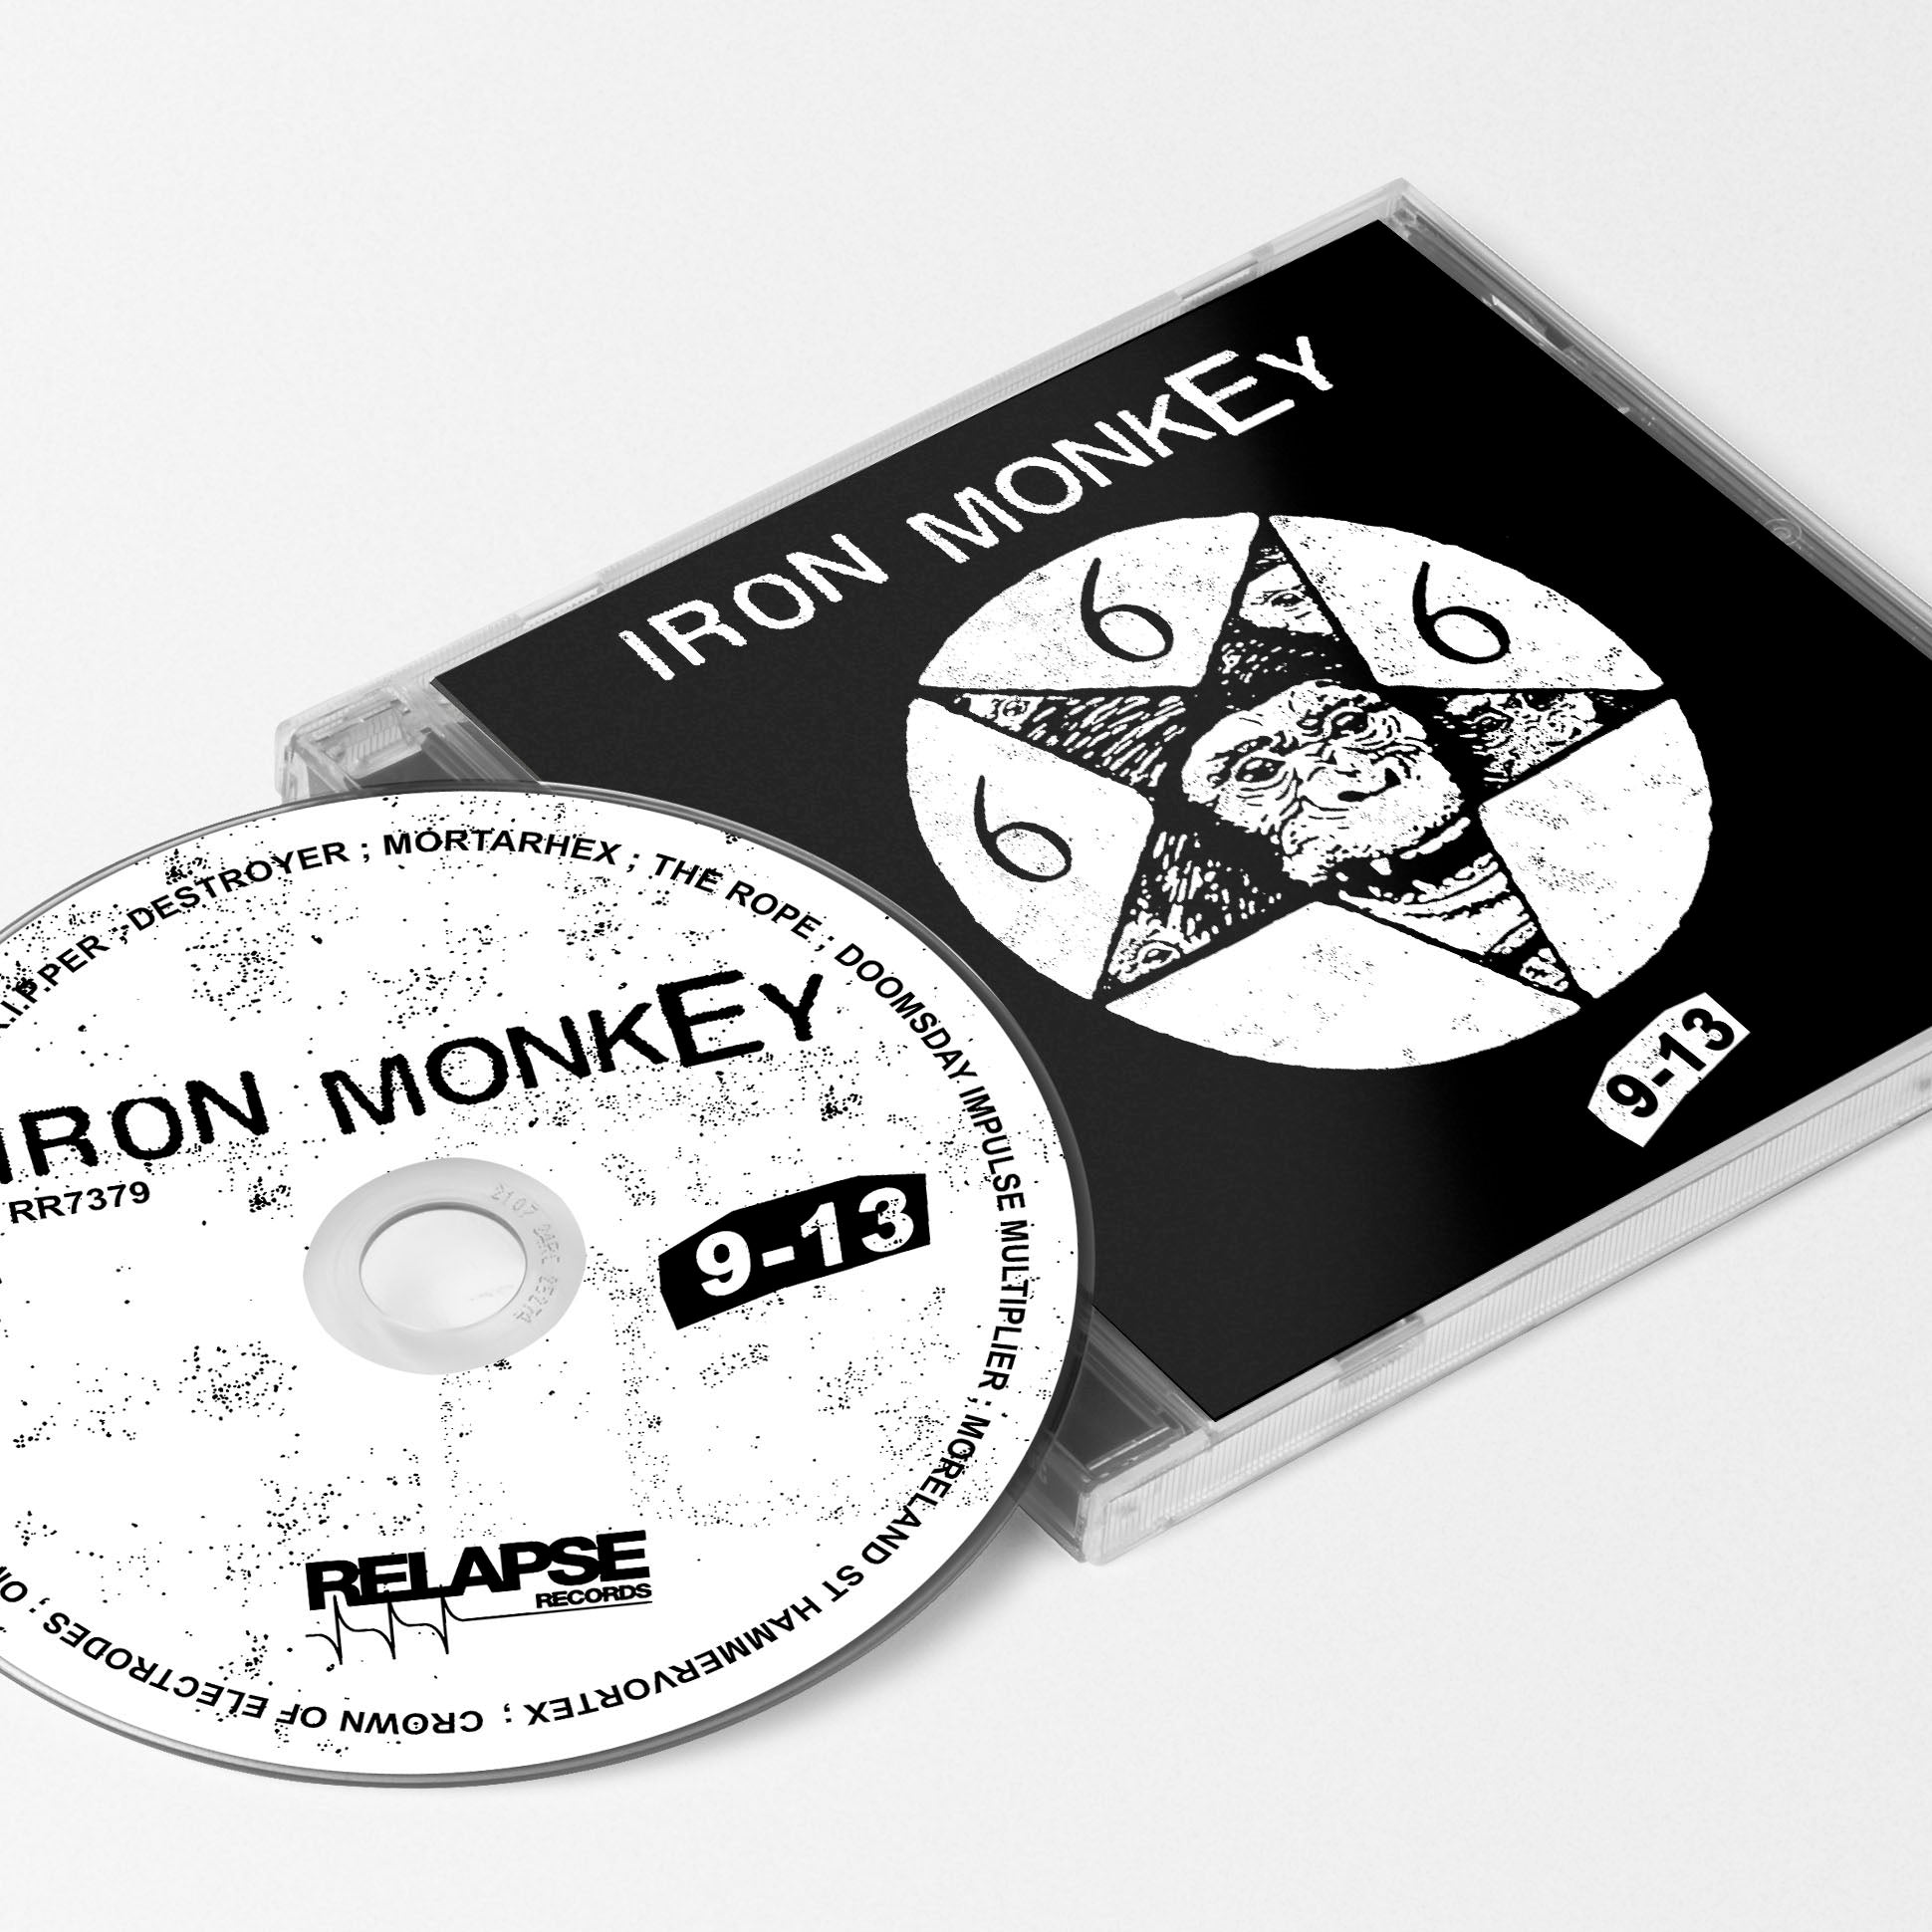 Iron Monkey "9-13" CD